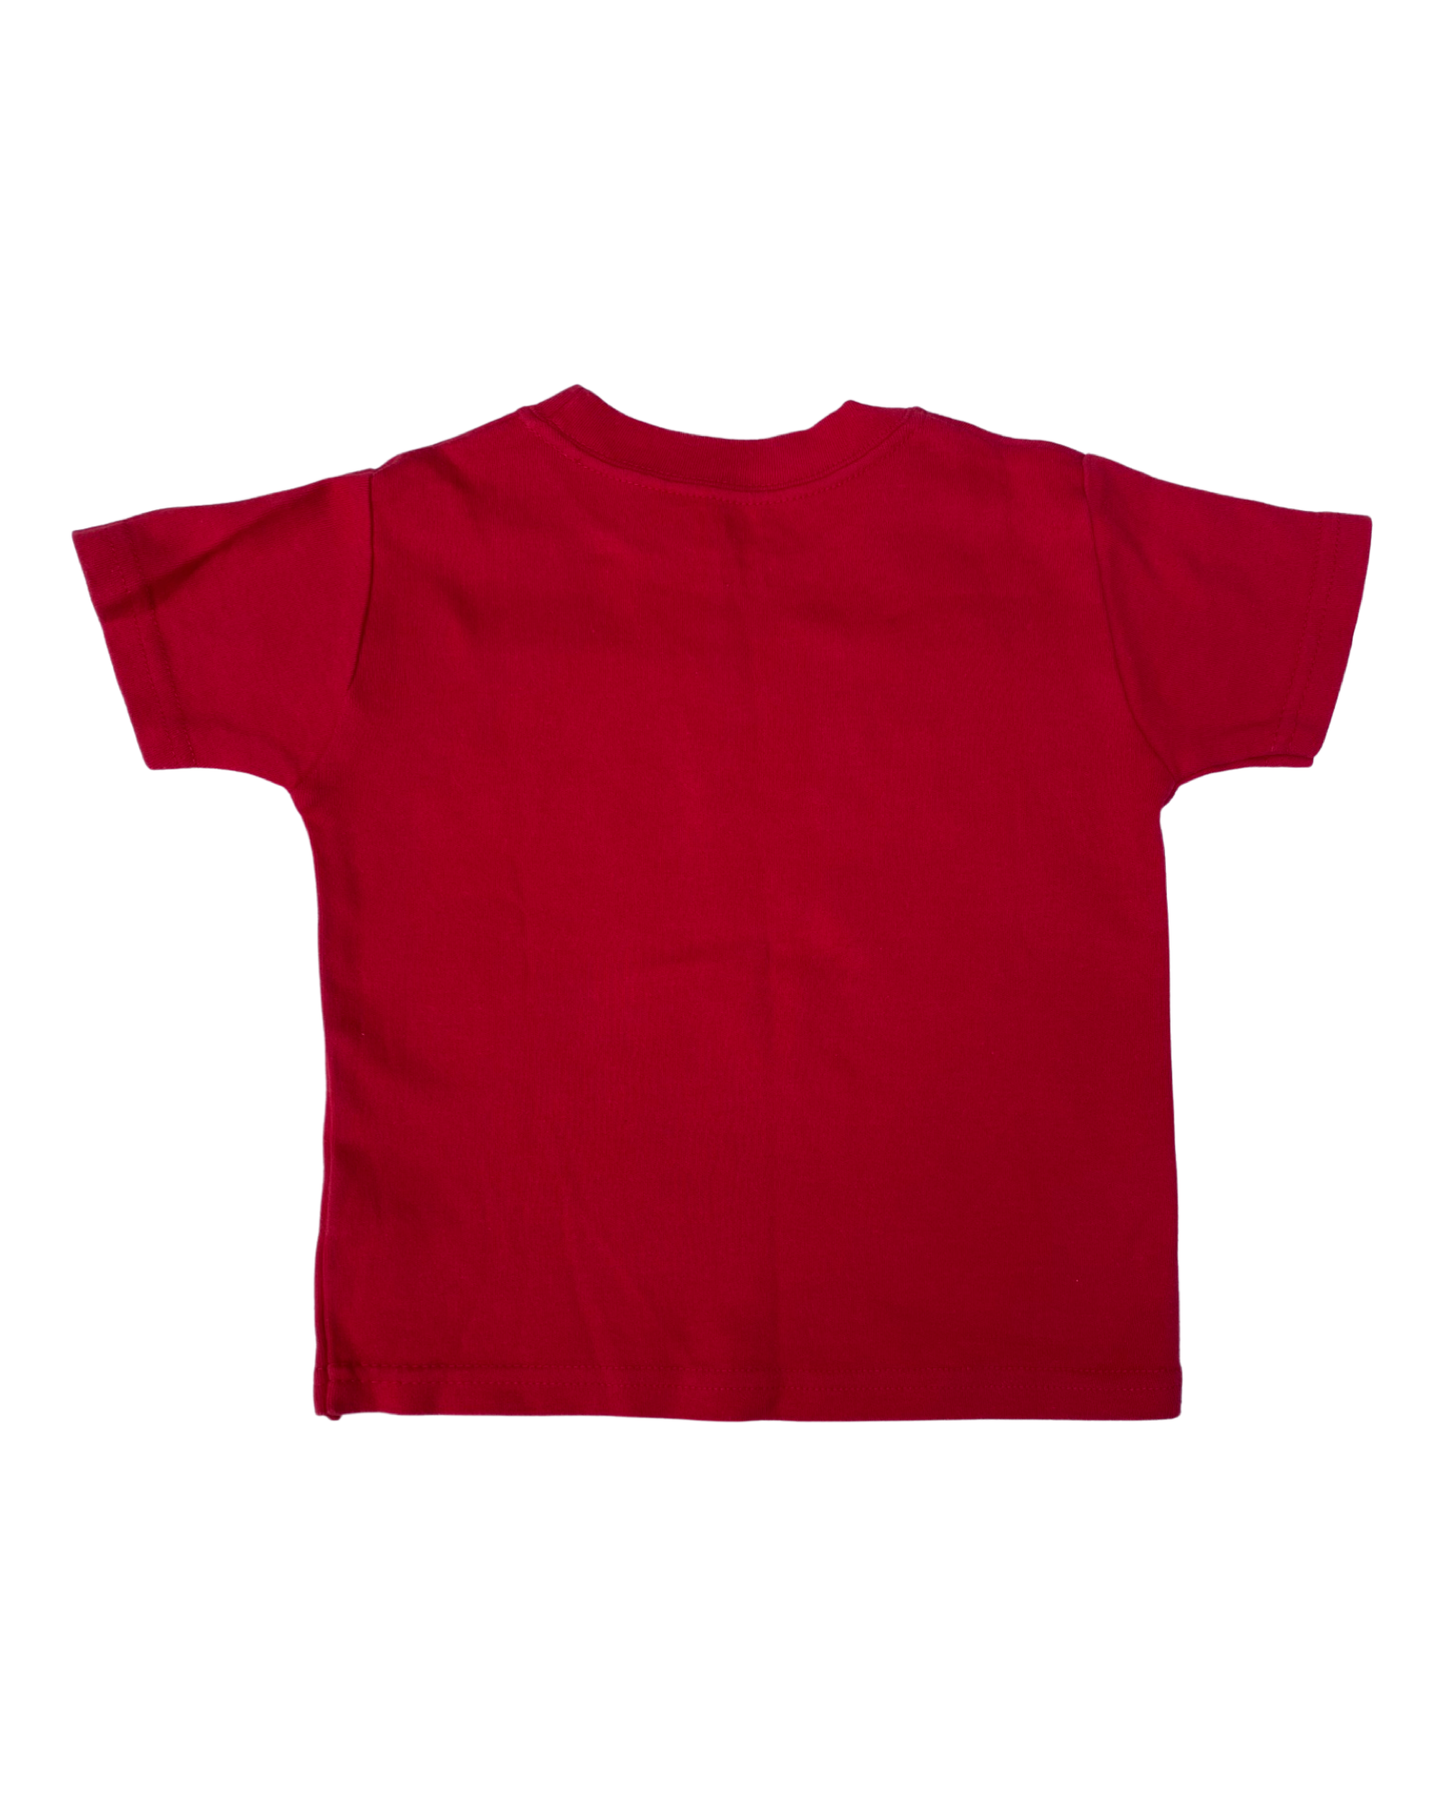 Josiah Mari Milkaholic t shirt (size 6-12mths)